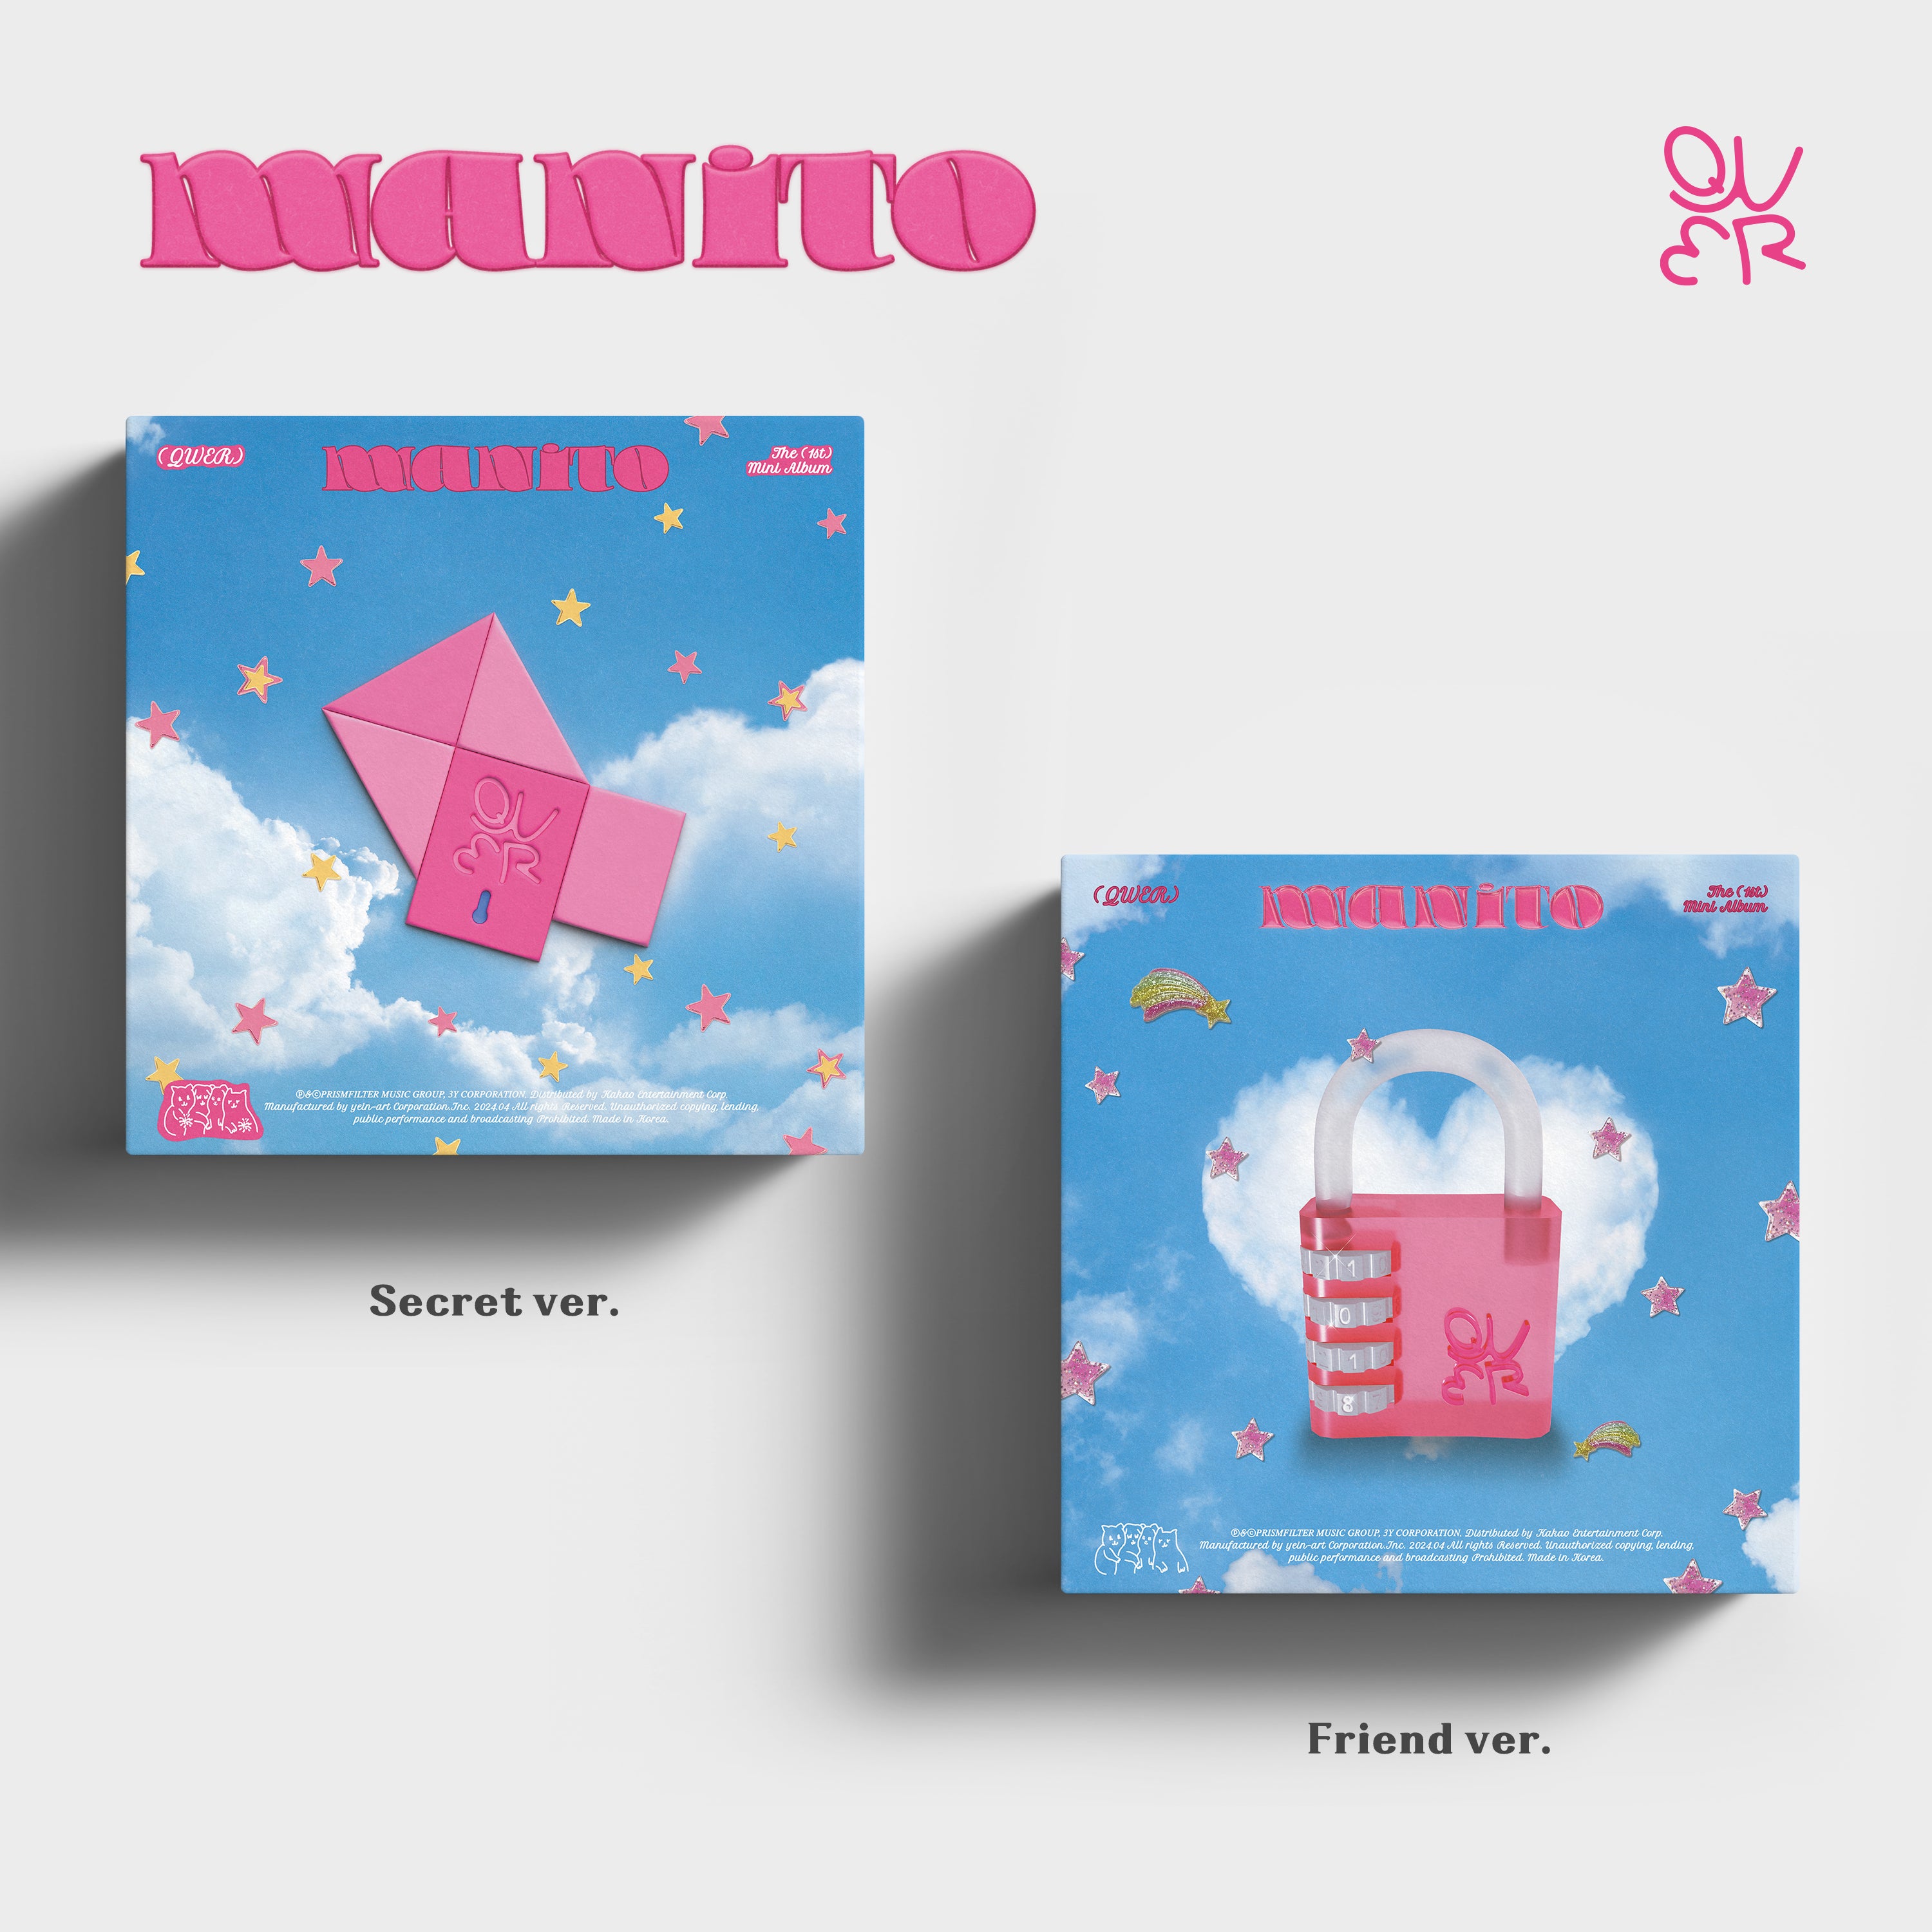 QWER - 1ST MINI ALBUM [MANITO] Kpop Album - Kpop Wholesale | Seoufly